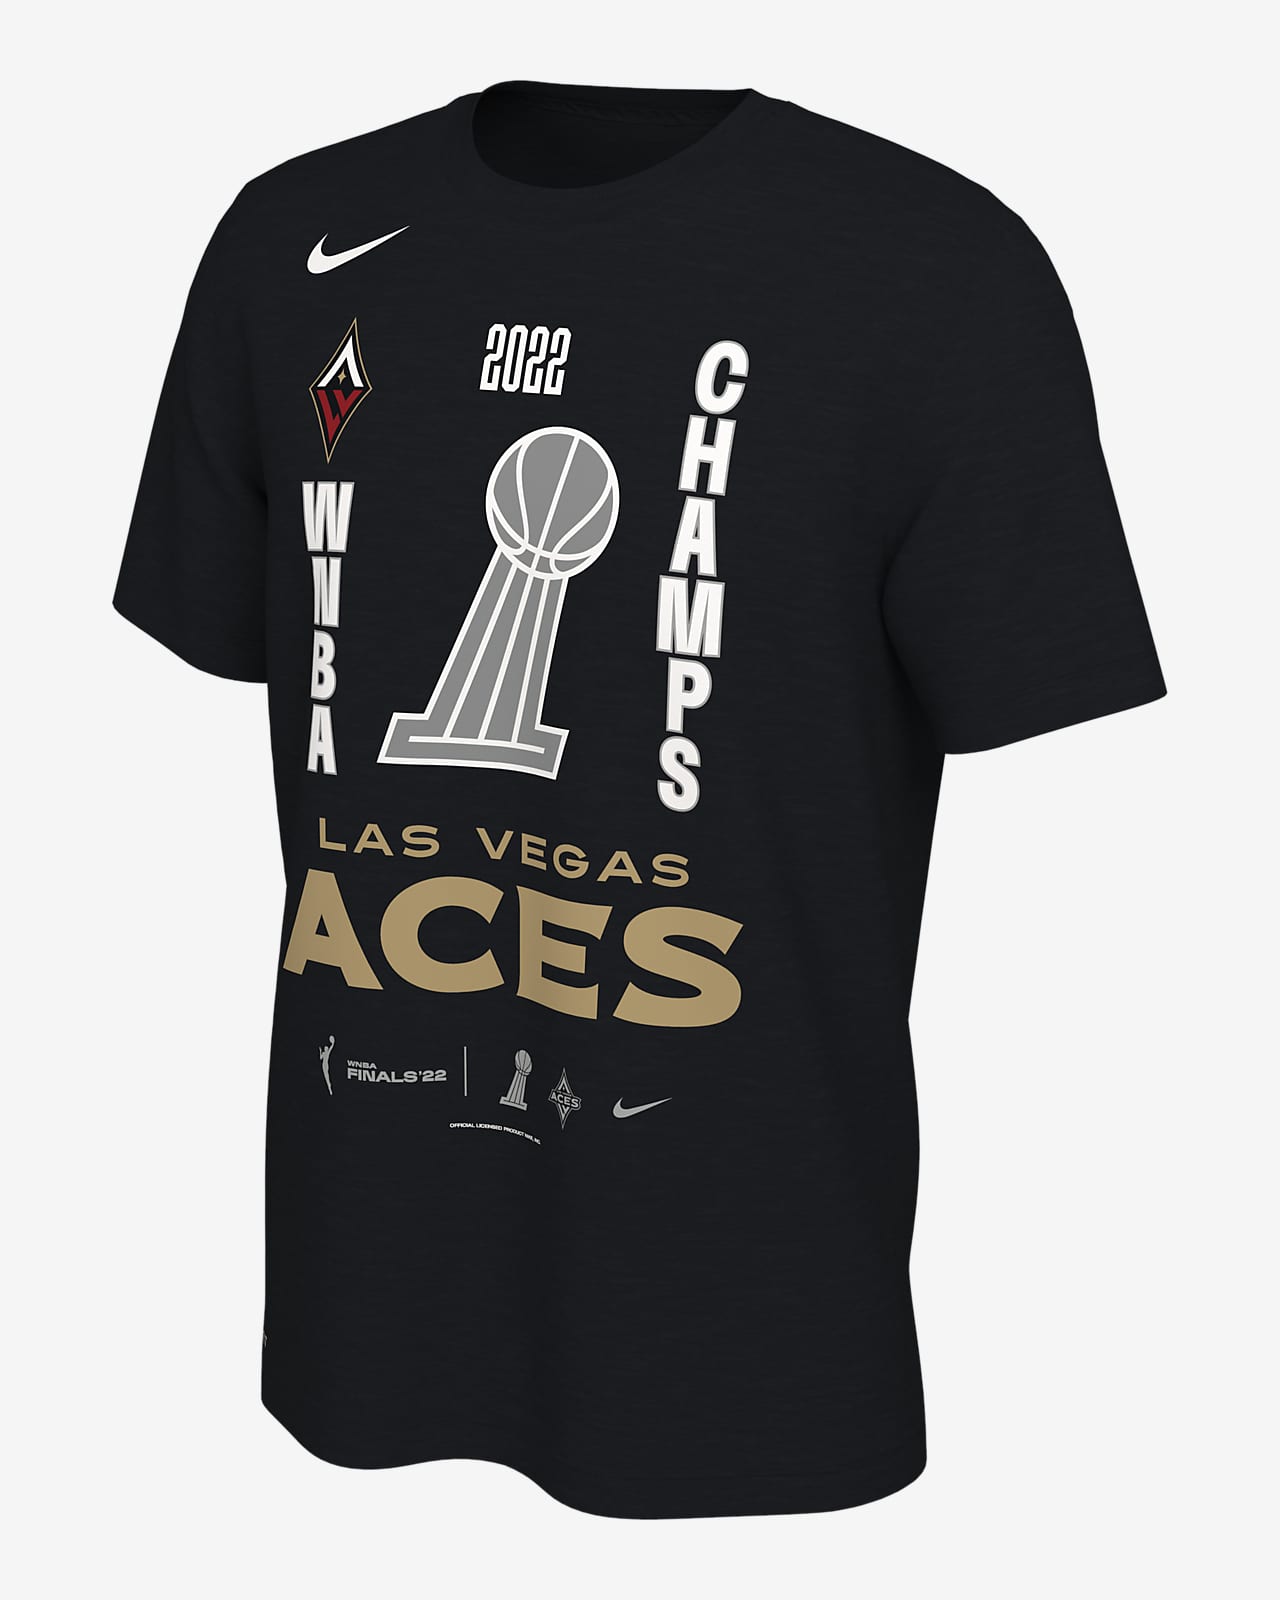 Playera Nike WNBA para hombre Las Vegas Aces